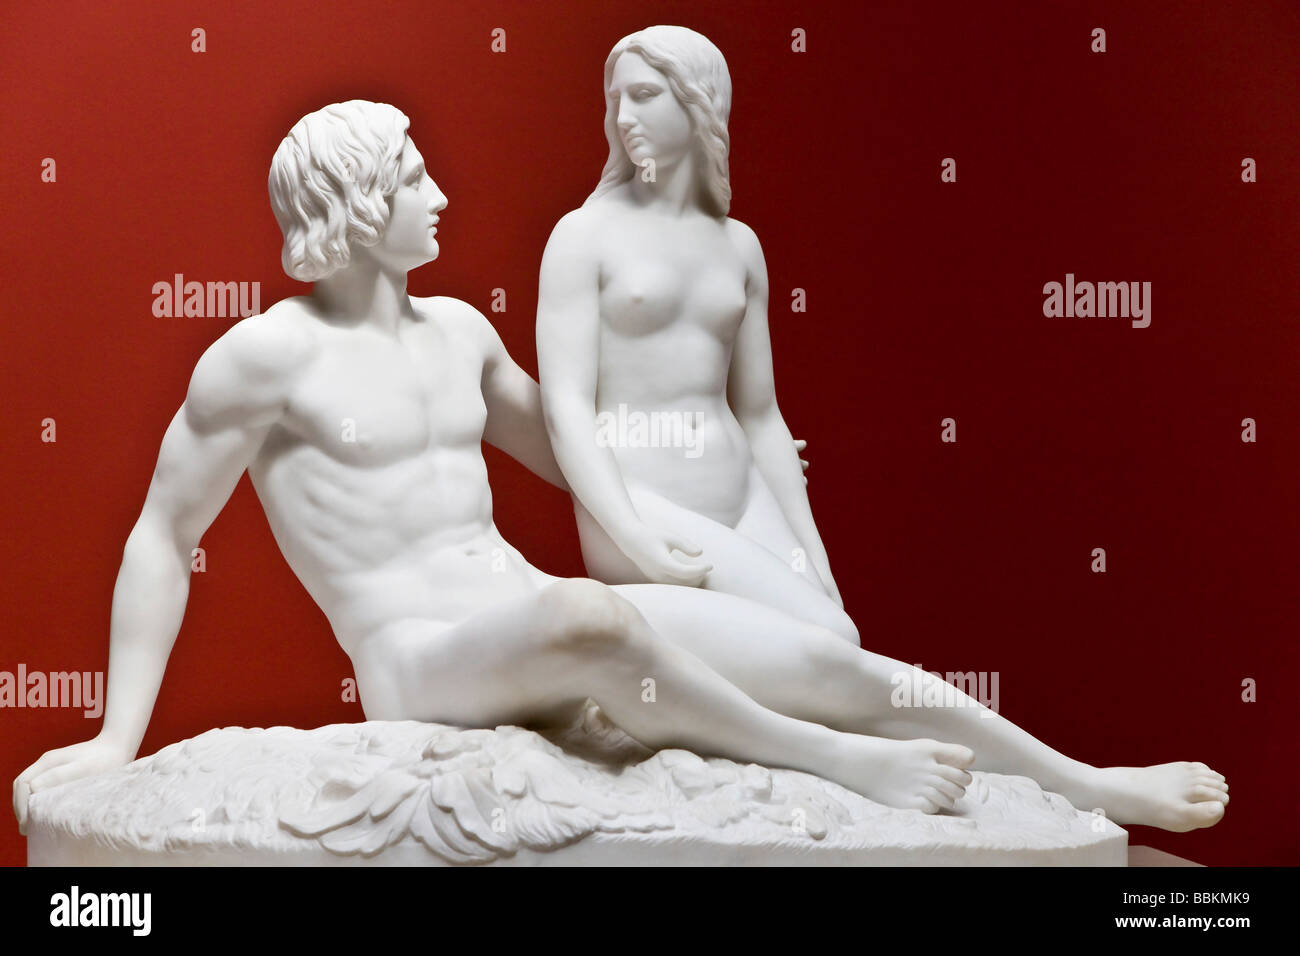 Sculpture adam eve immagini e fotografie stock ad alta risoluzione - Alamy